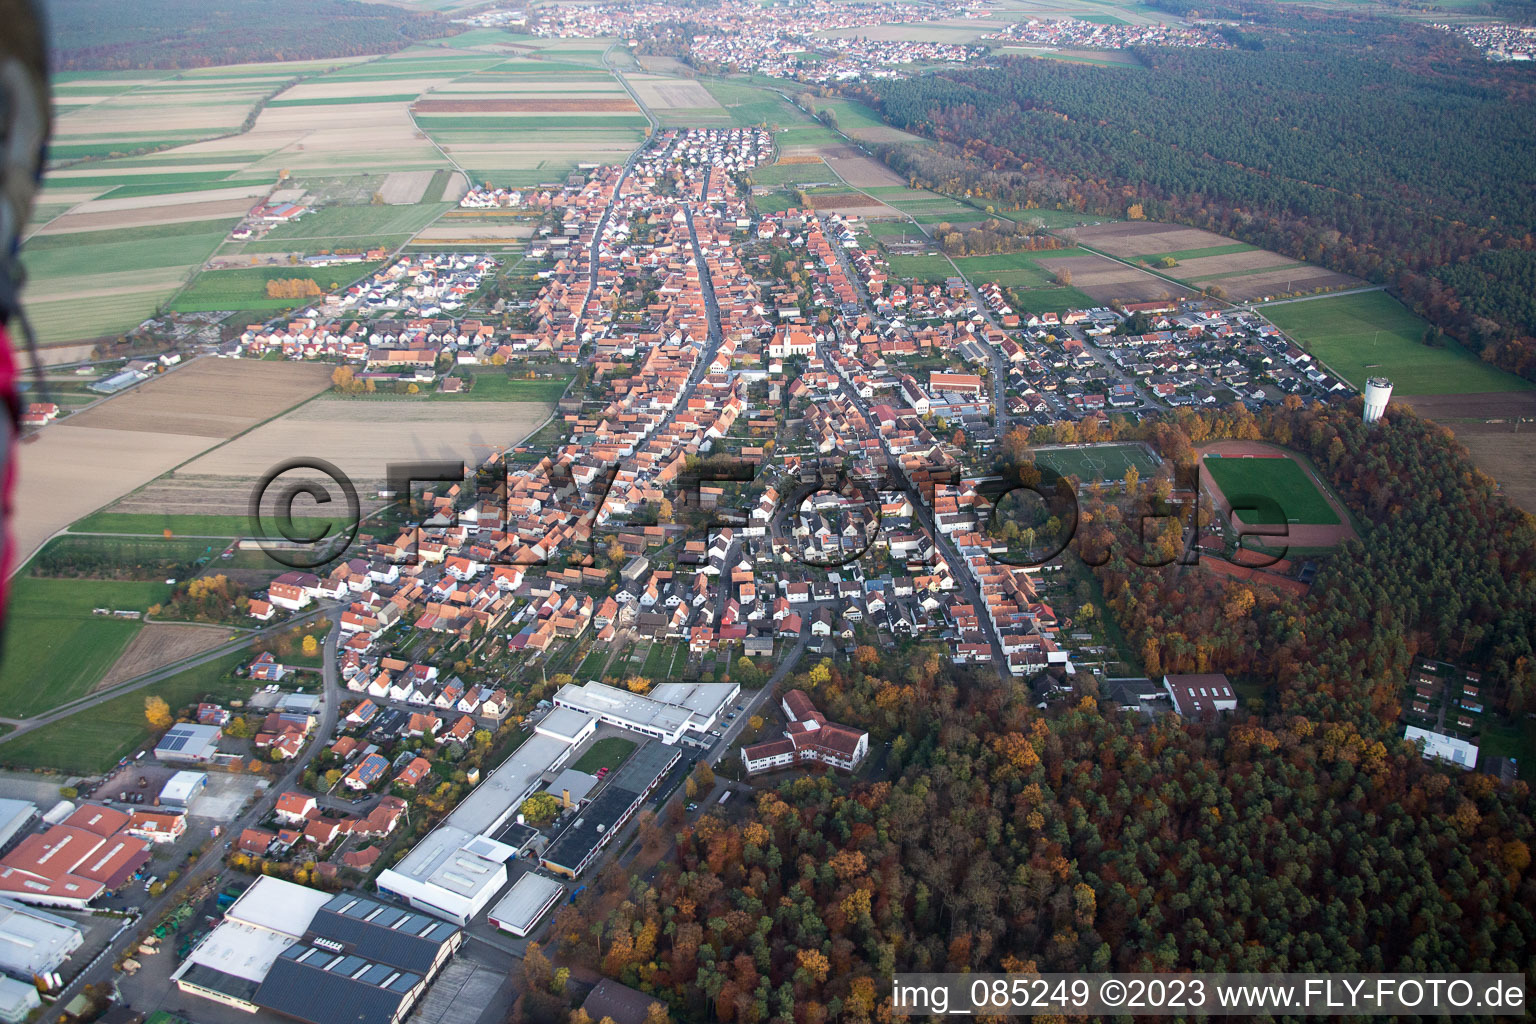 Aerial view of Hatzenbühl in the state Rhineland-Palatinate, Germany